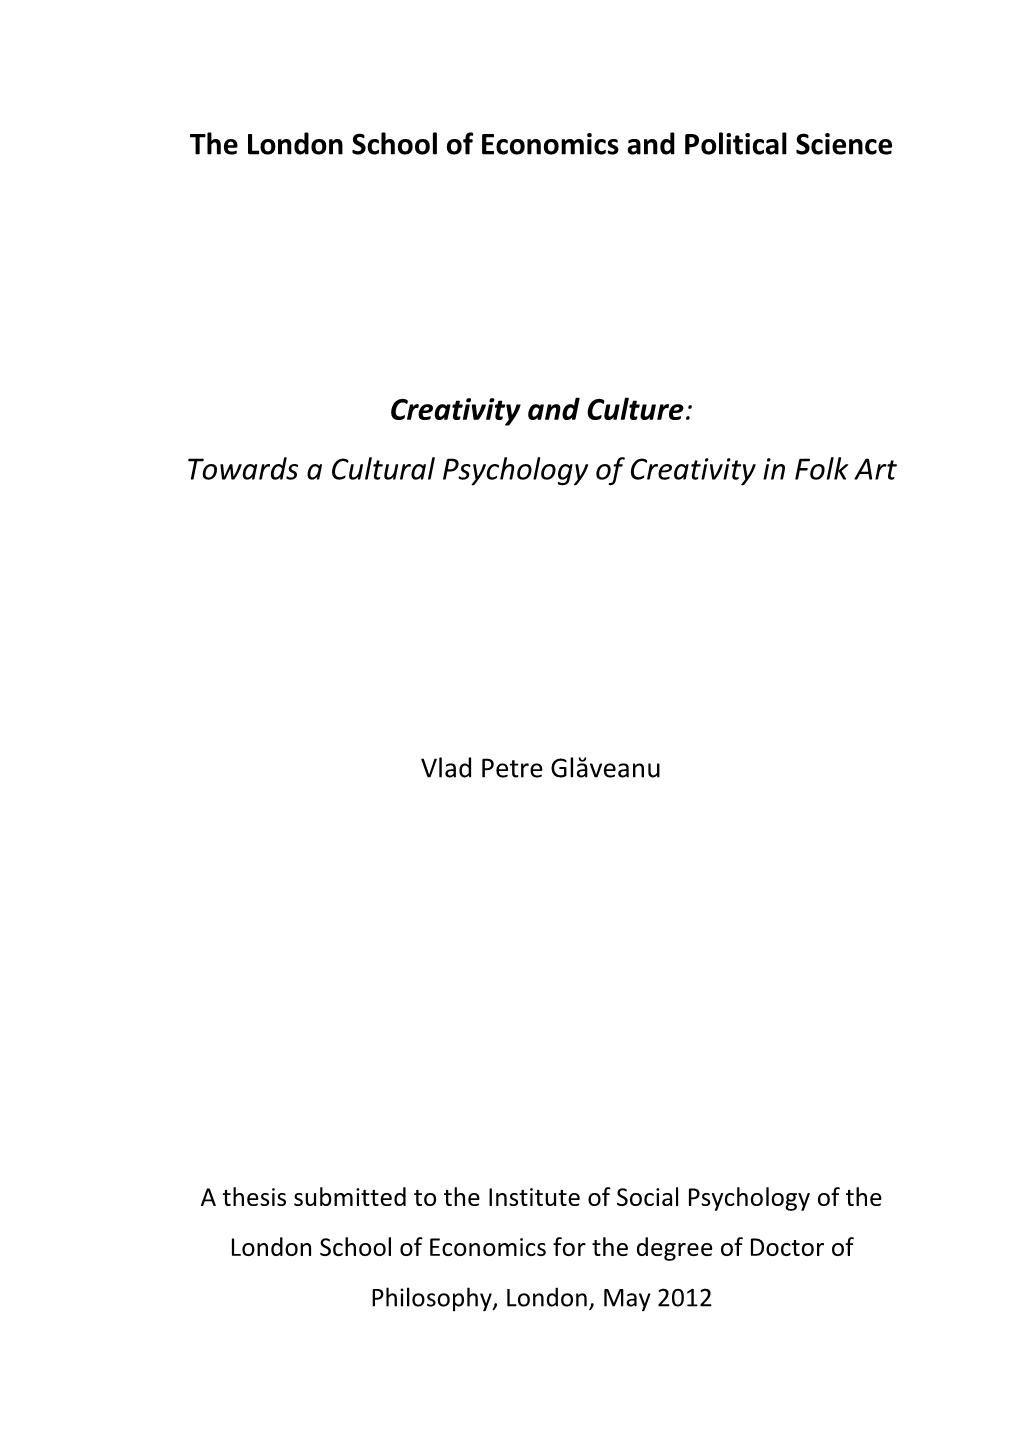 Creativity and Culture: Towards a Cultural Psychology of Creativity in Folk Art